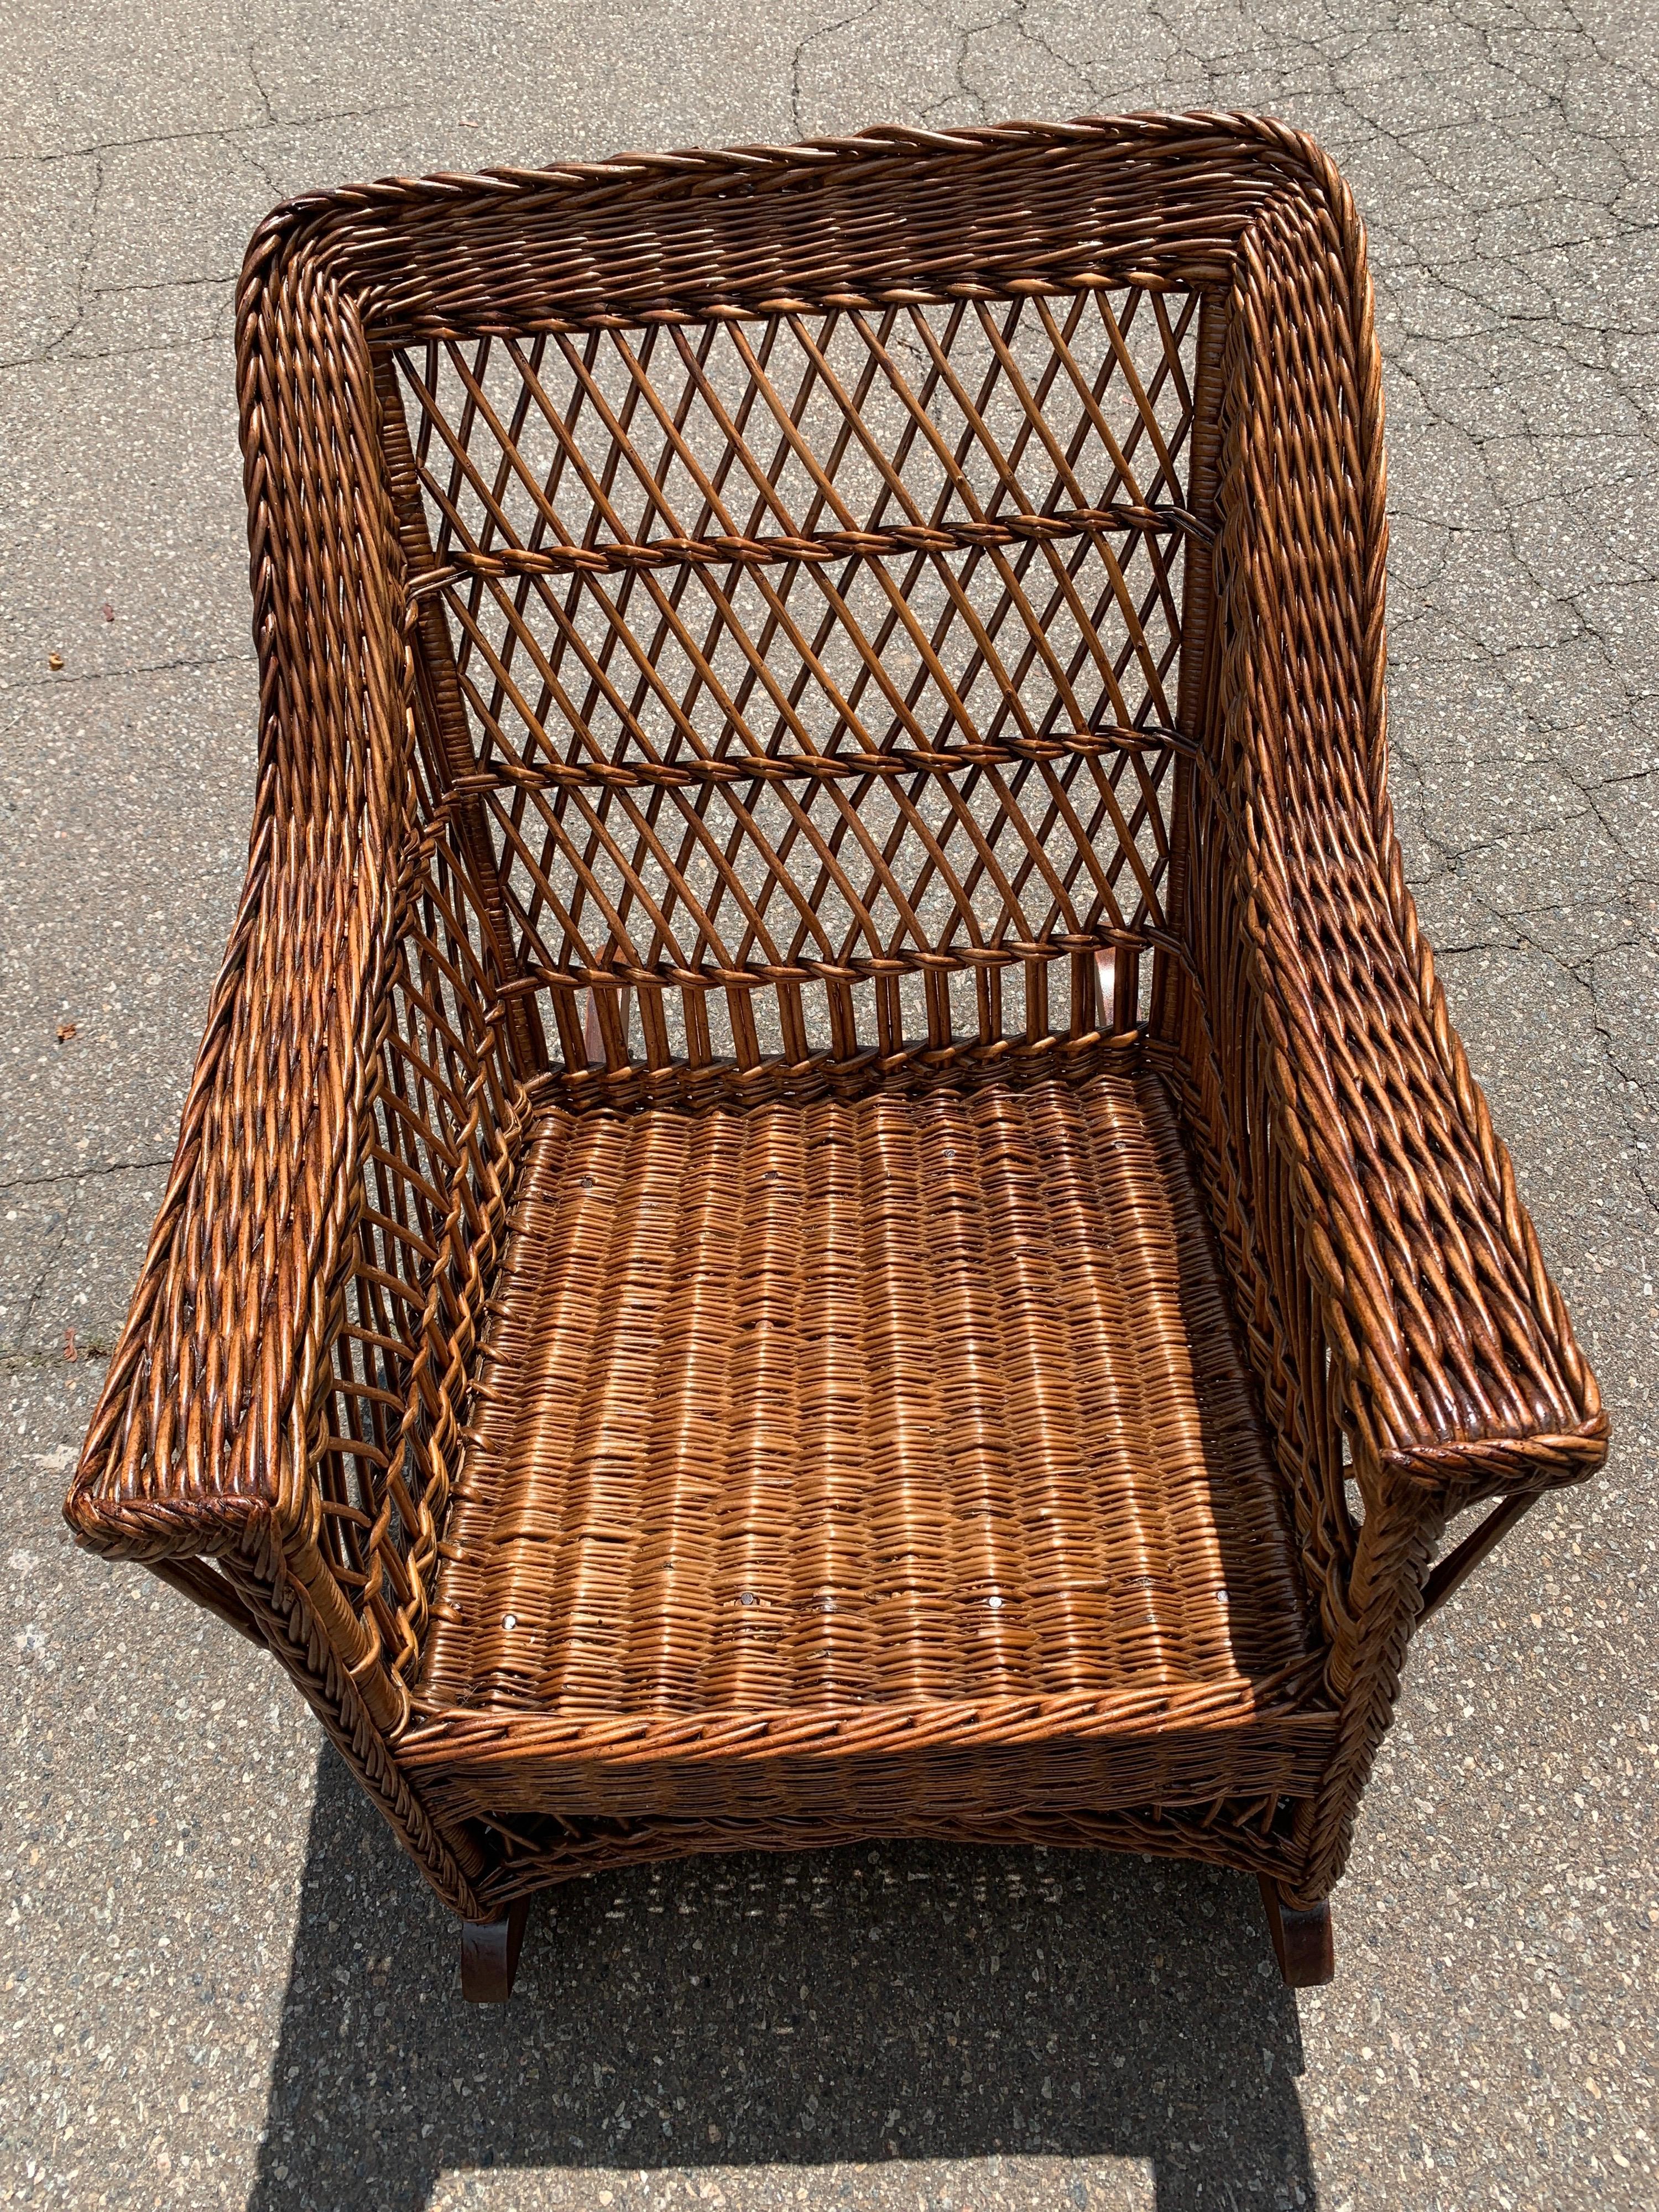 Antique Wicker Rocking Chairs 1